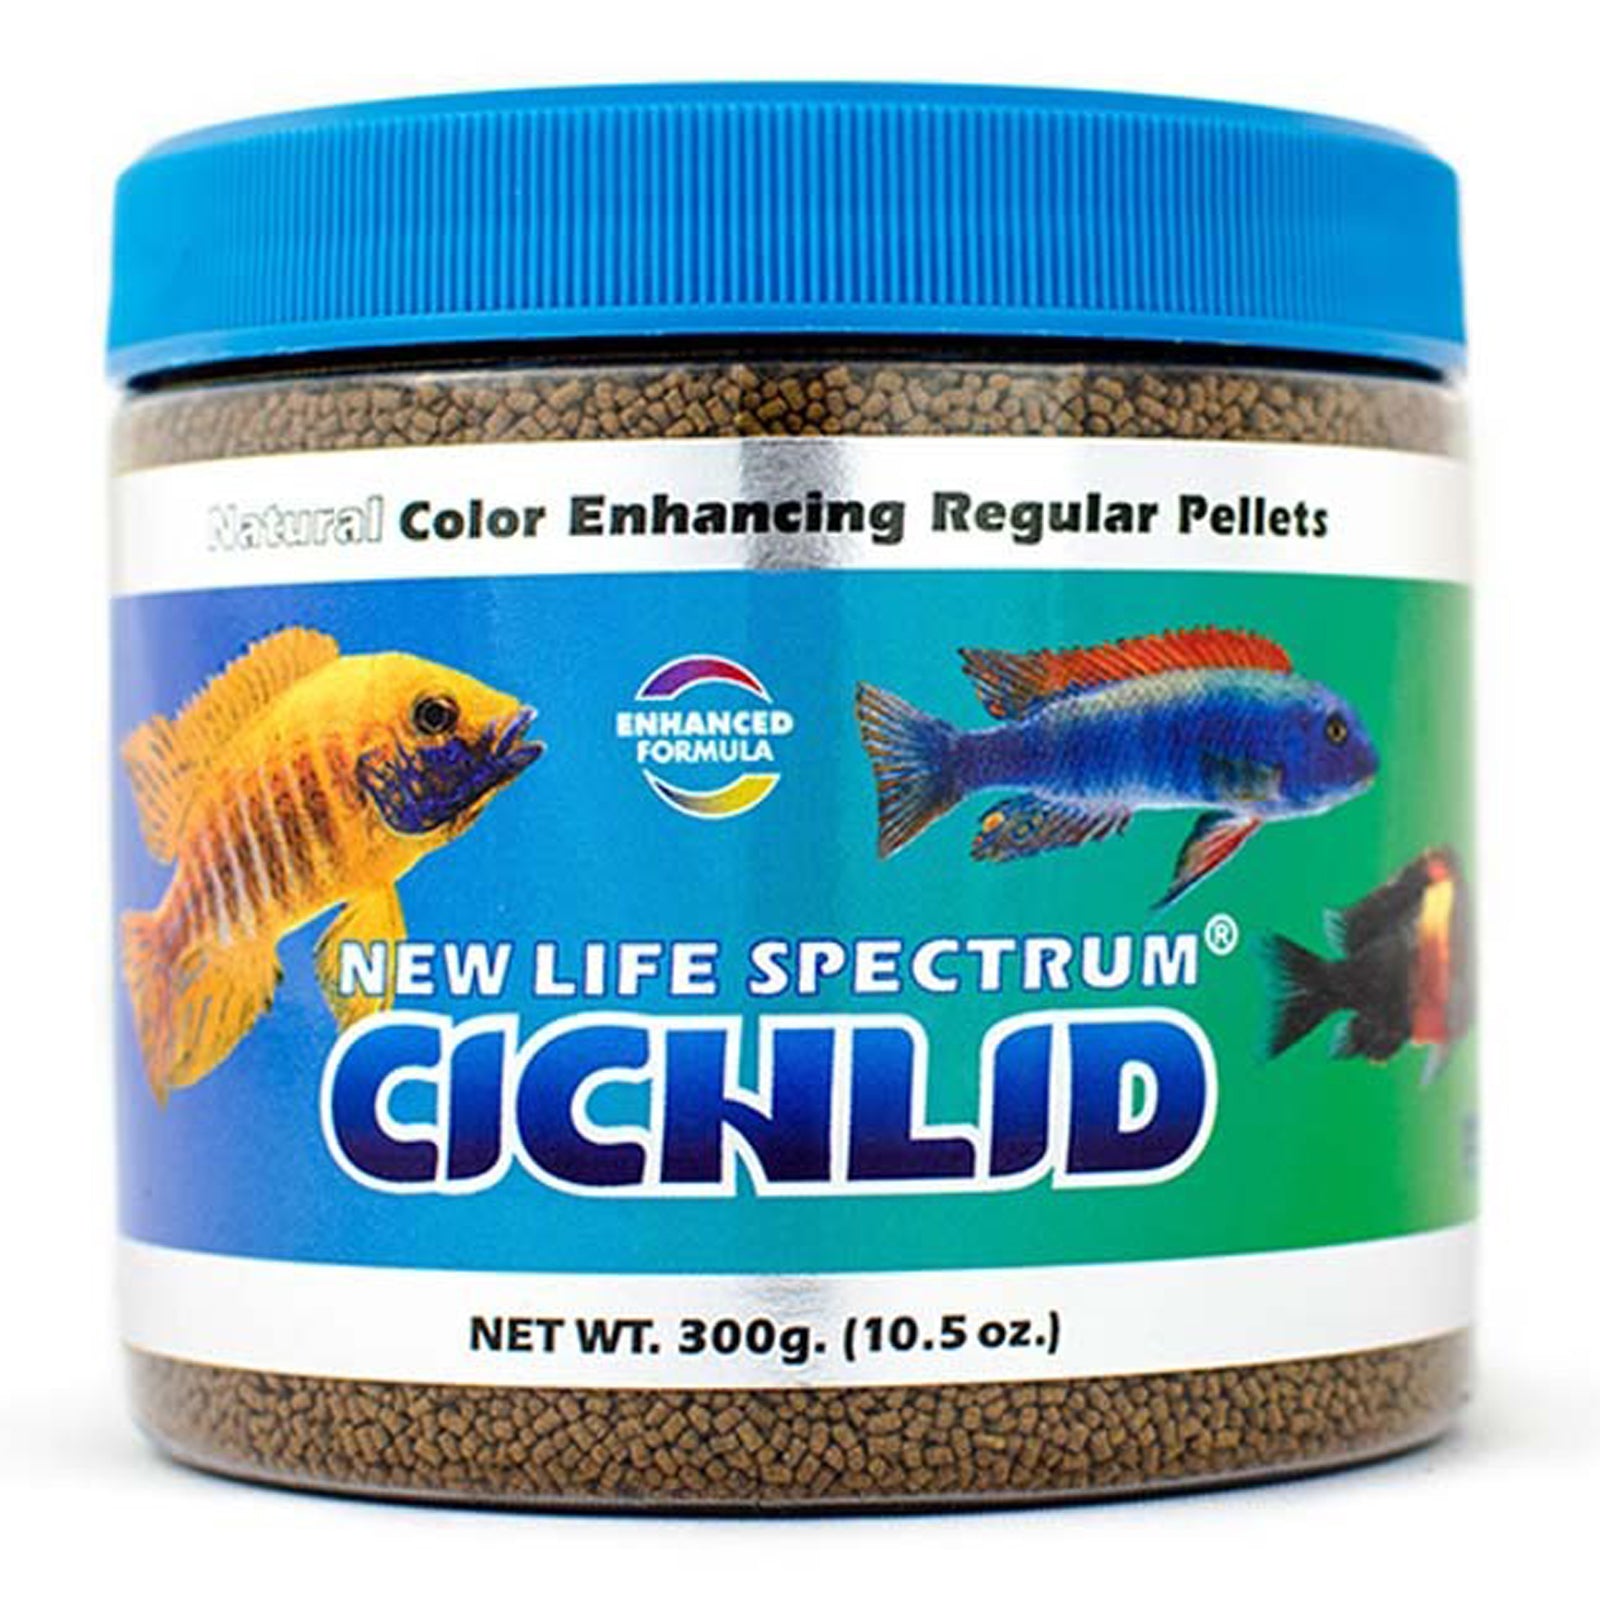 colorful cichlid